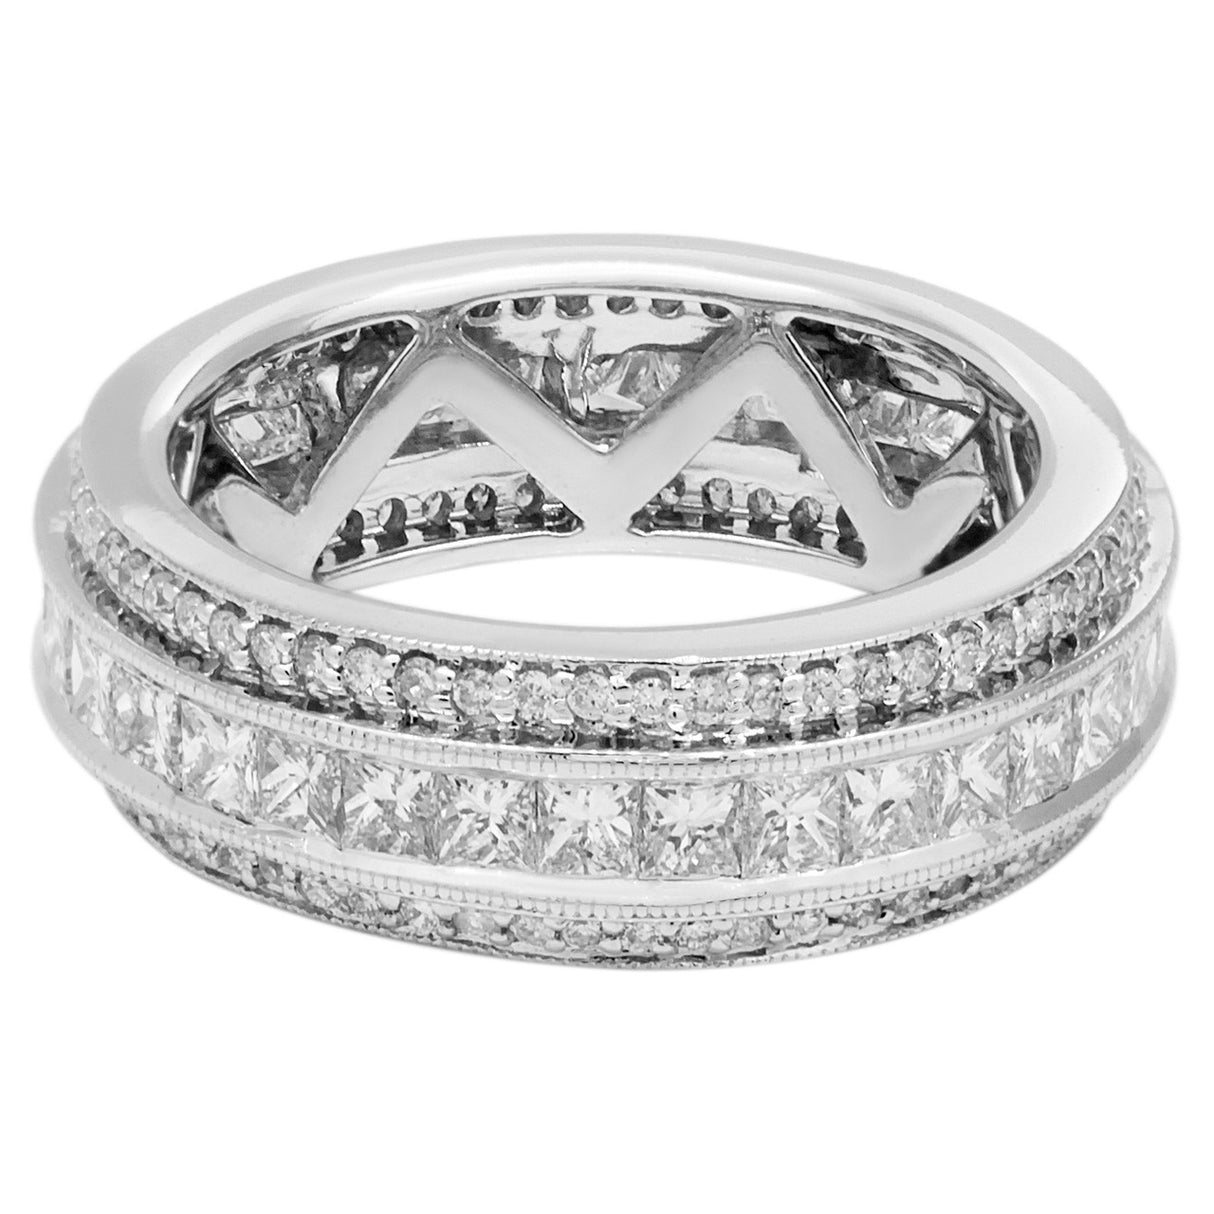 18K White Gold 2.15 Carat Diamond Eternity Ring